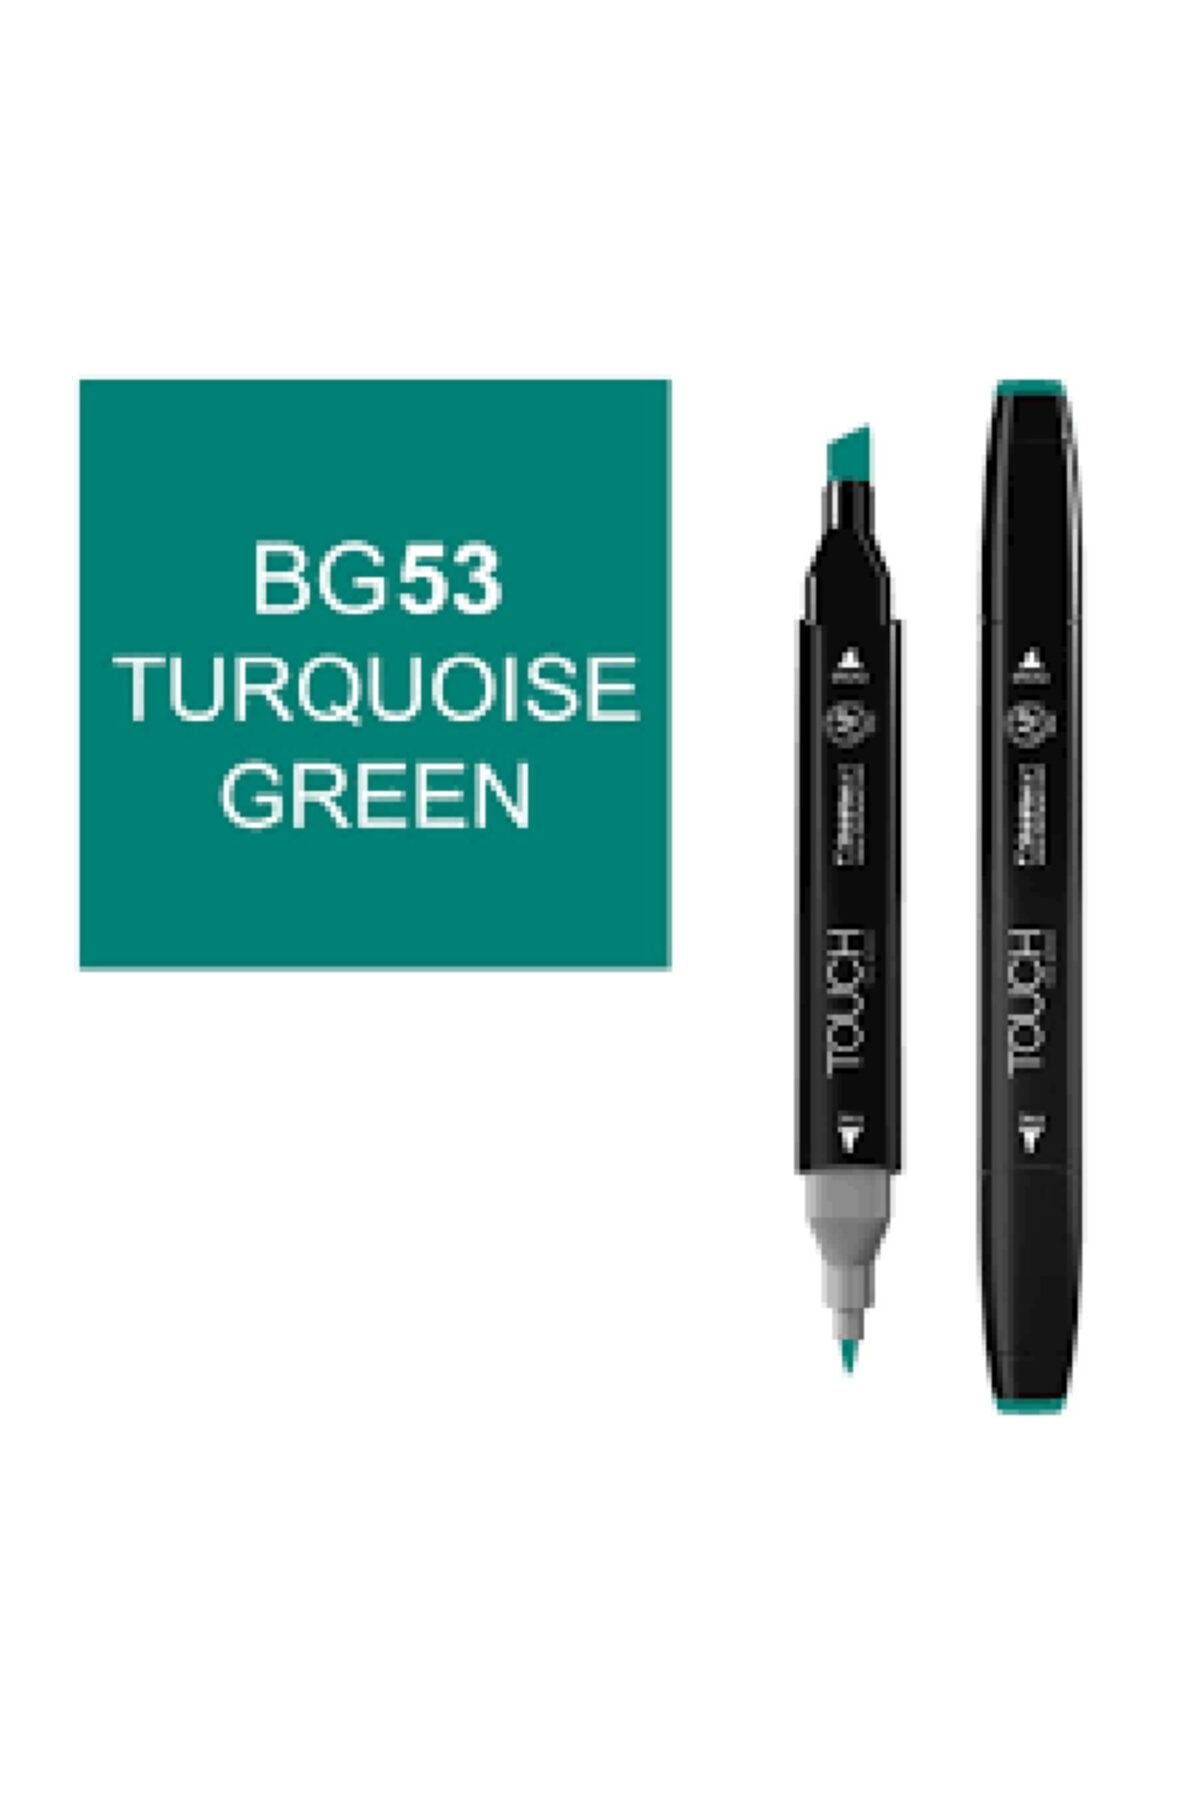 Ponart Touch Twin Bg53 Turquoise Green Marker Sh1110053